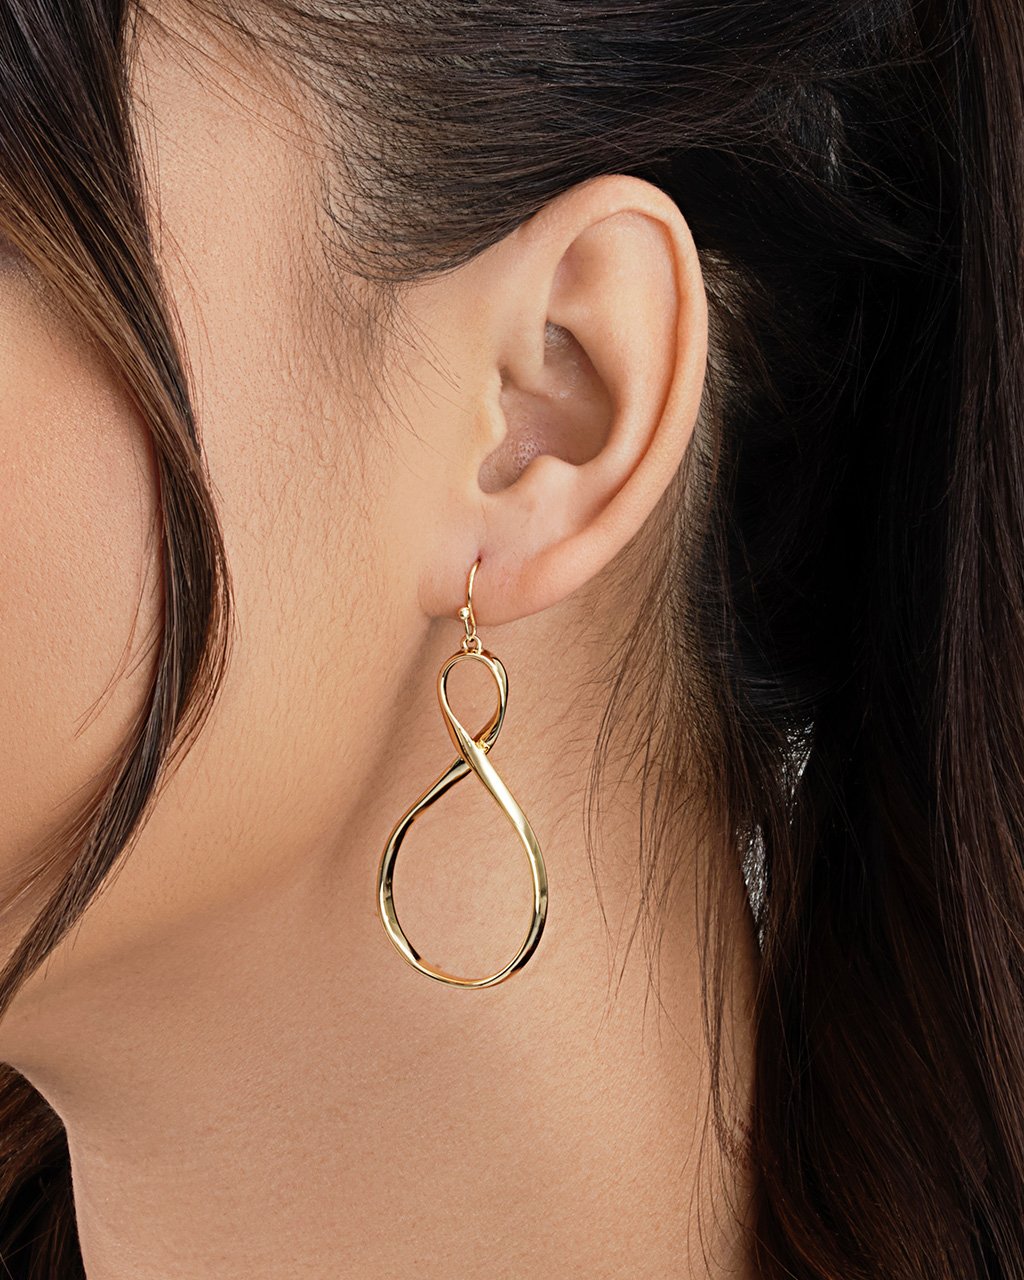 Buy 22k Golden Infinity Gold Earrings Online from Vaibhav Jewellers